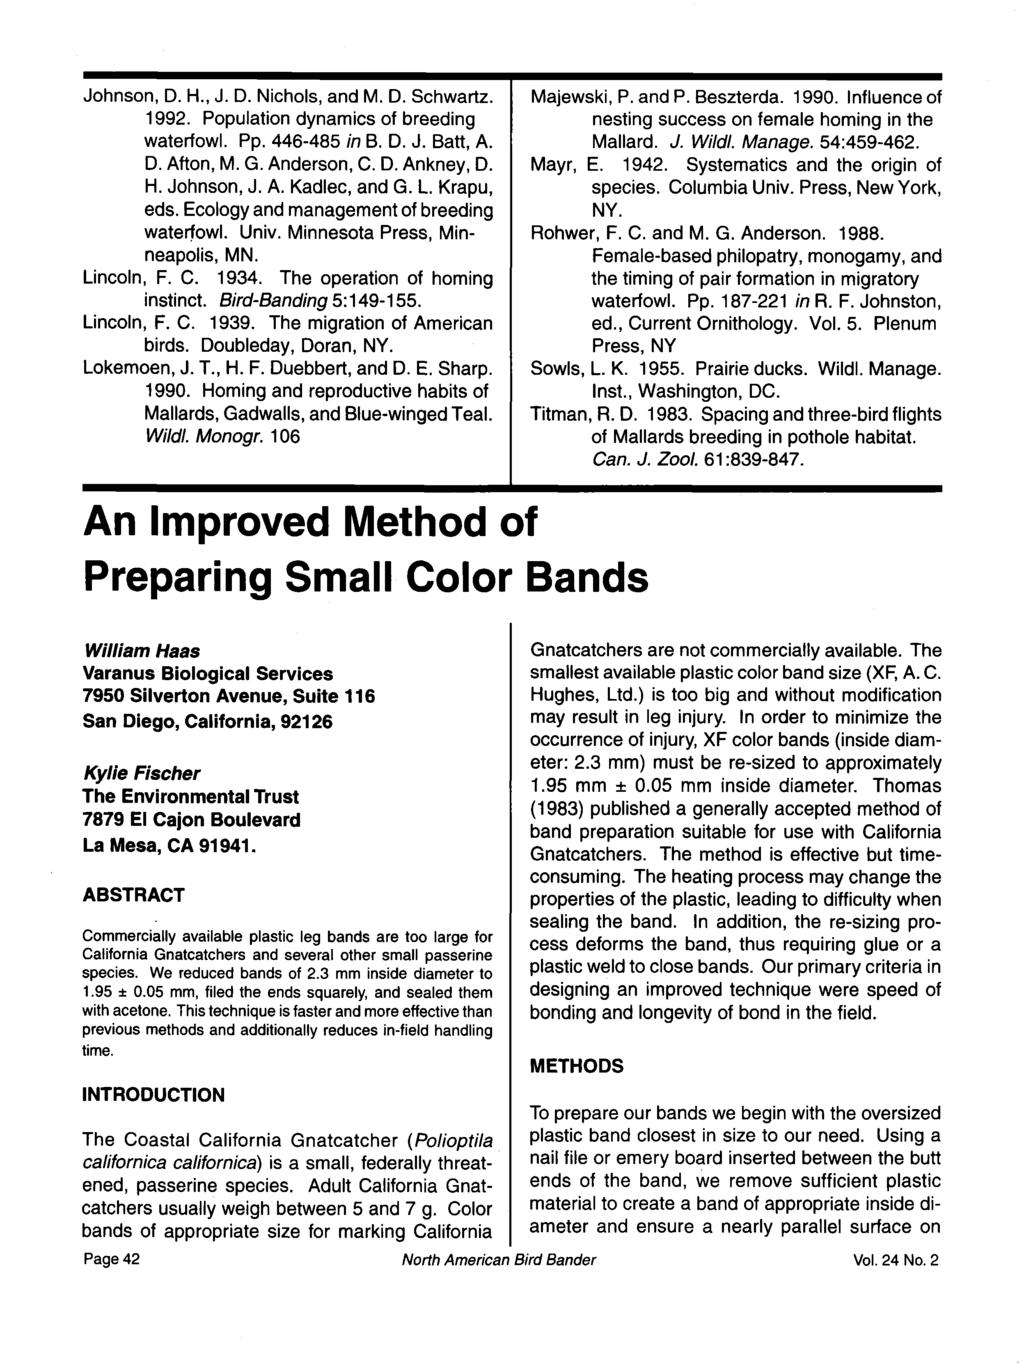 Johnson, D. H., J. D. Nichols, and M.D. Schwartz. 1992. Population dynamics of breeding waterfowl. Pp. 446-485 in B. D. J. Batt, A. D. Afton, M. G. Anderson, C. D. Ankney, D. H. Johnson, J. A. Kadlec, and G.